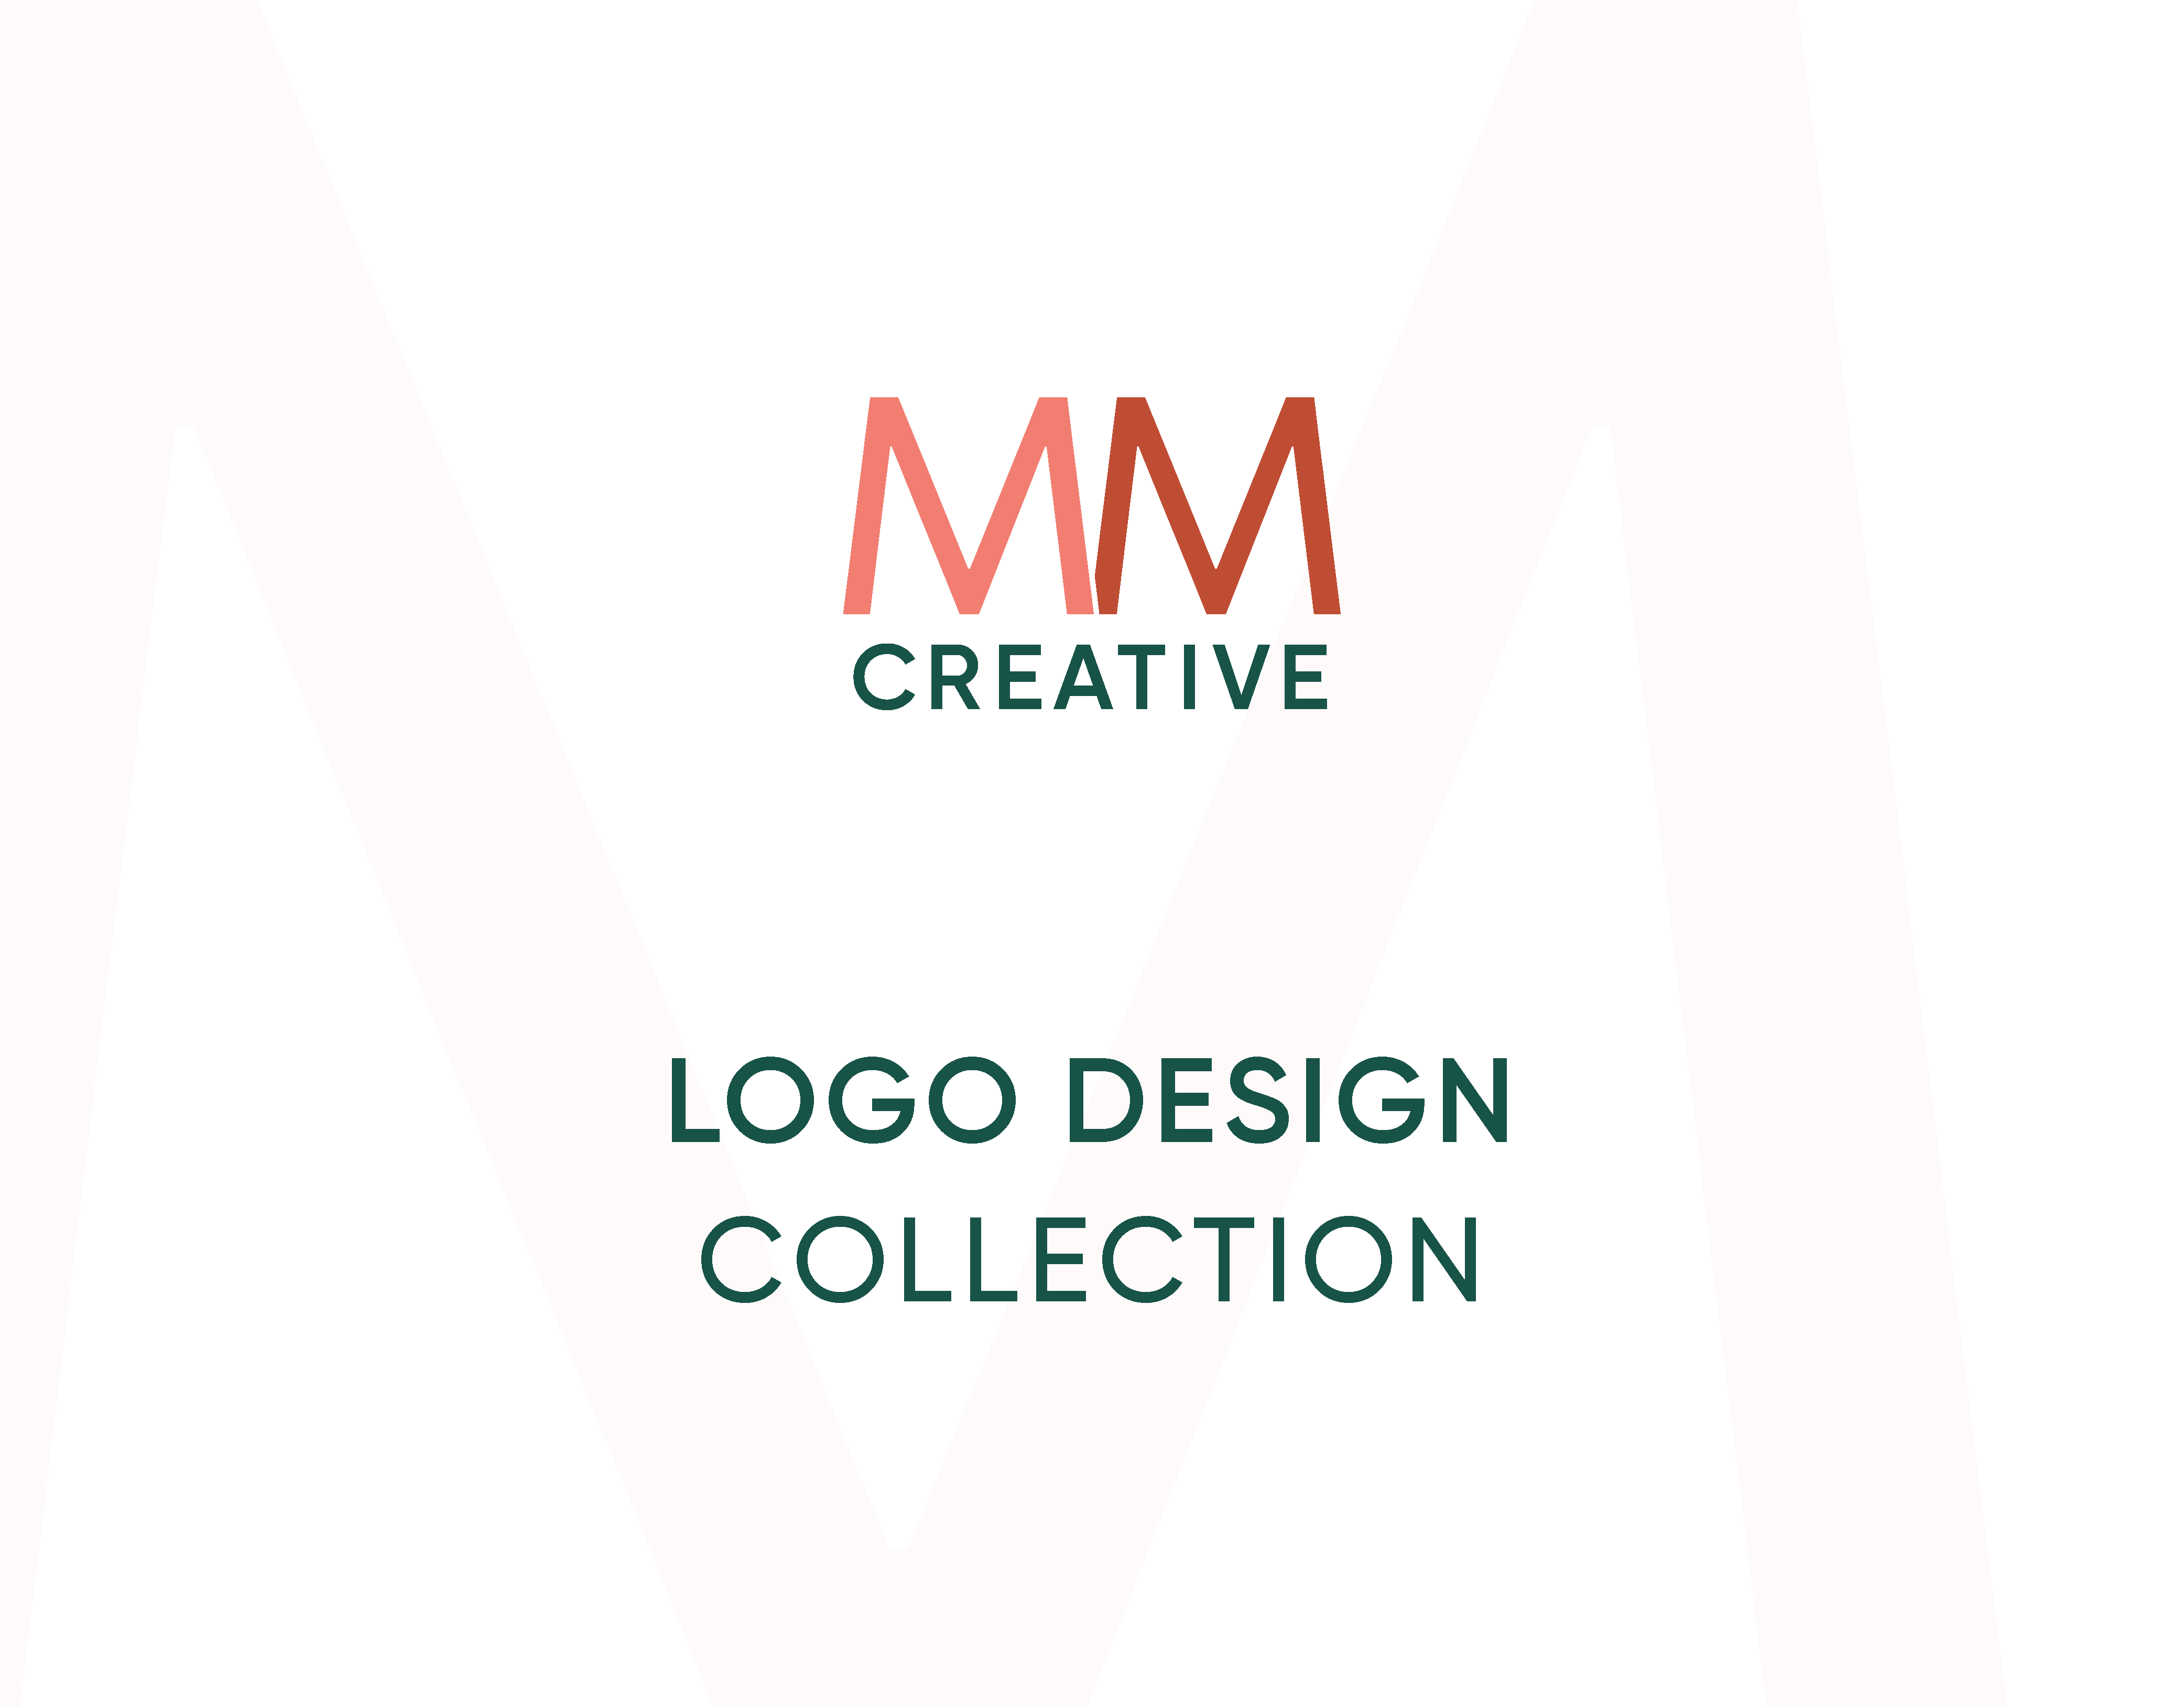 MM Creative Design